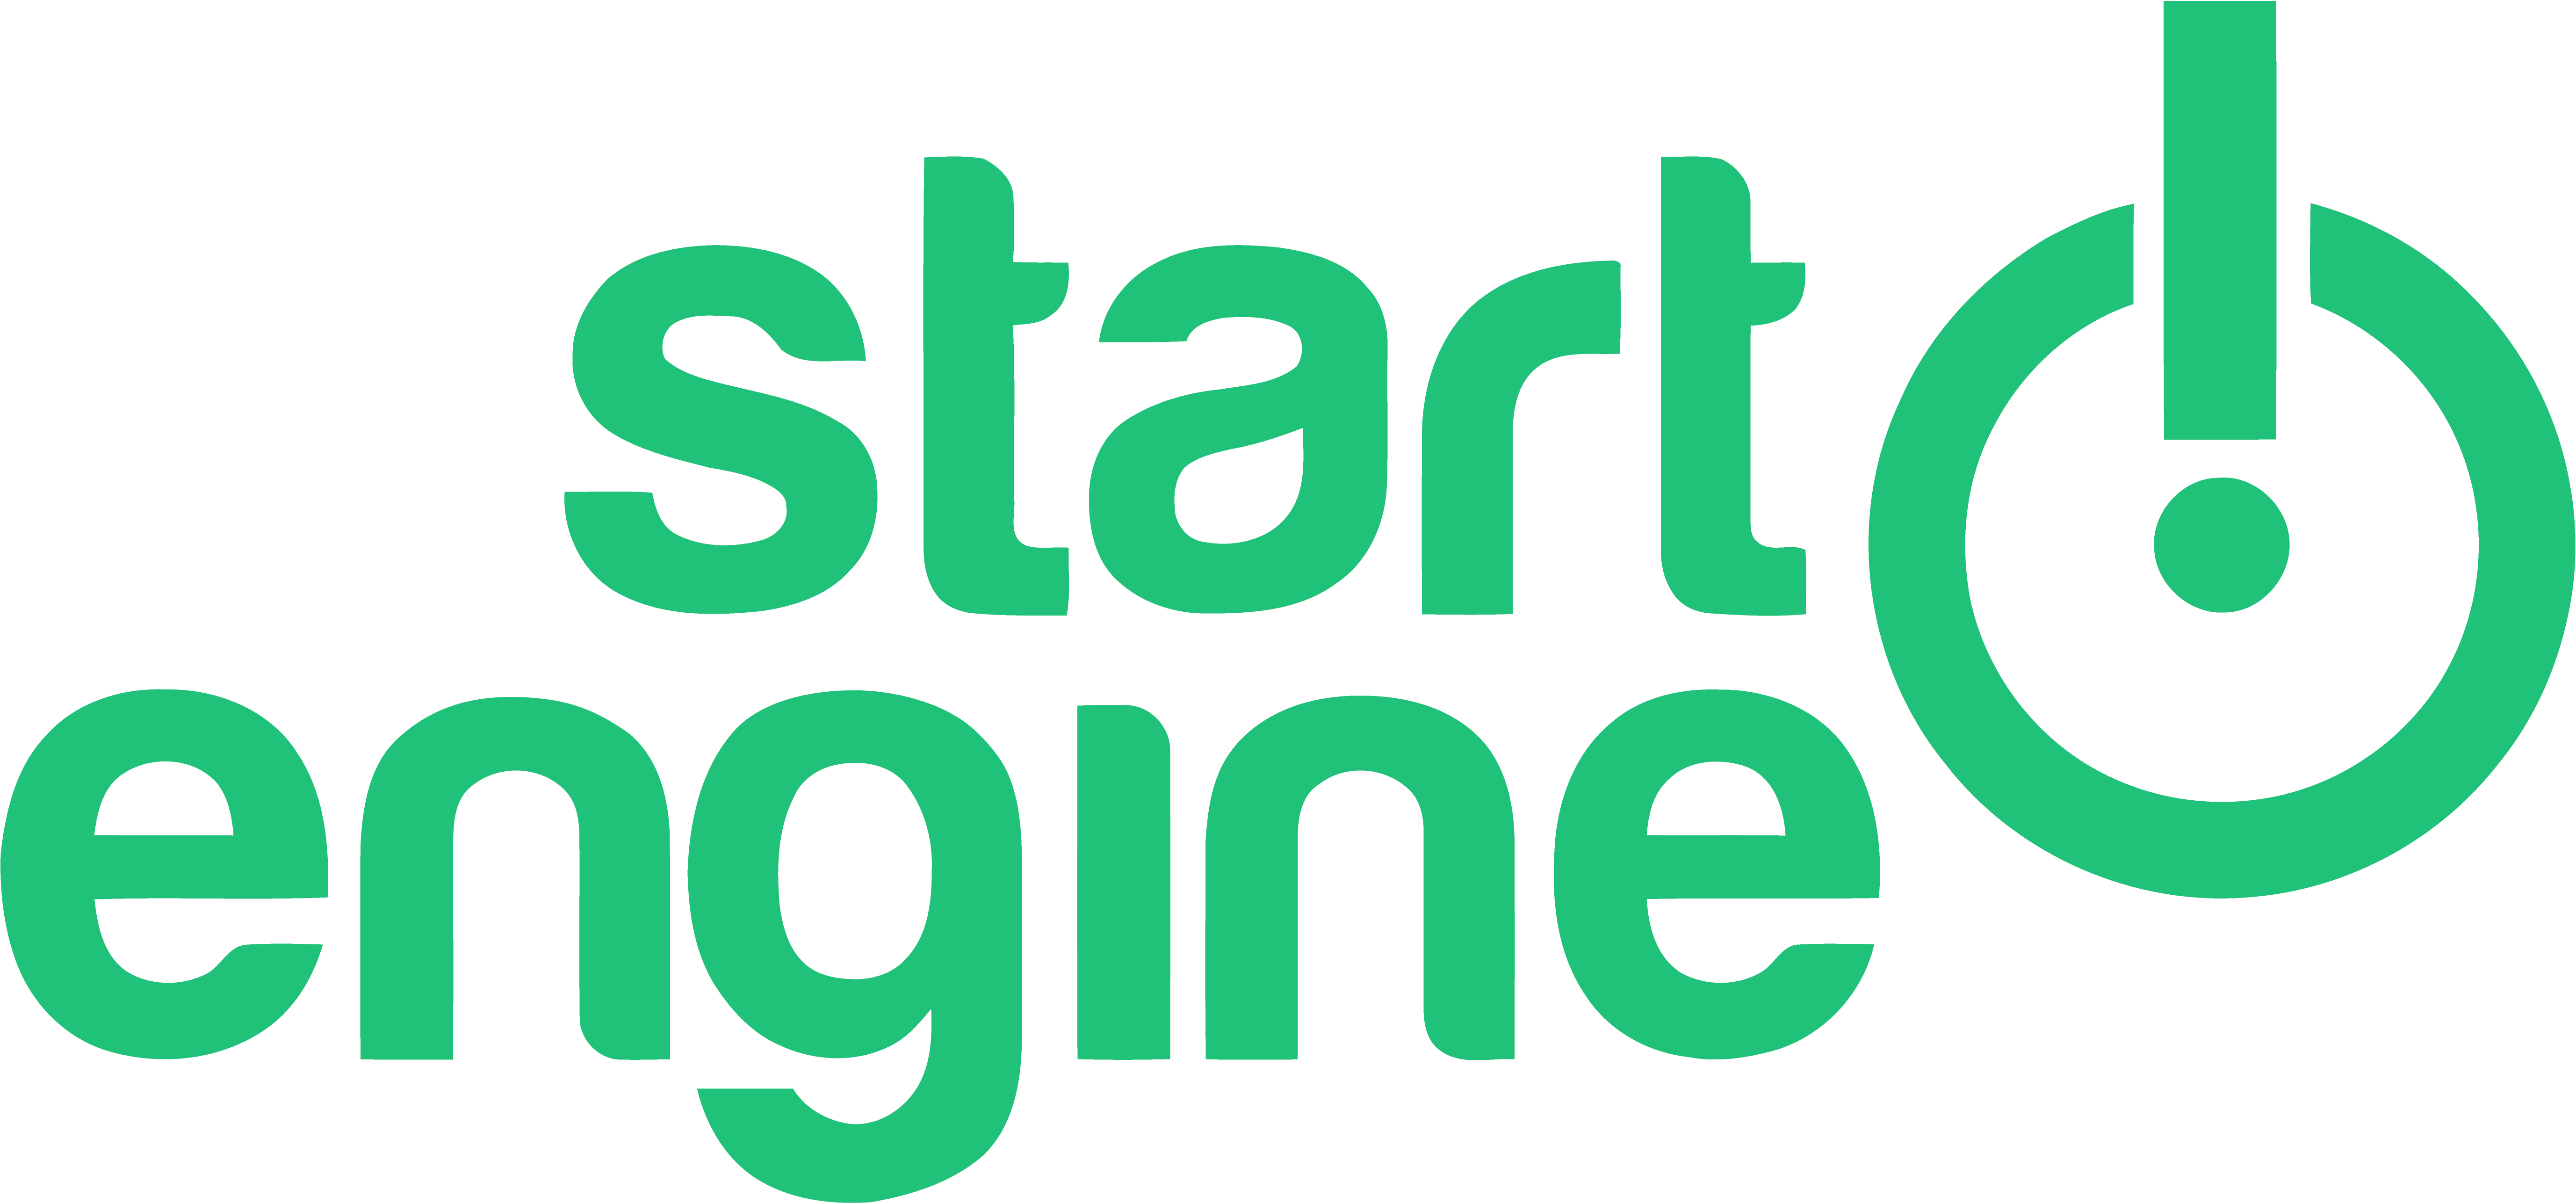 Start Engine logo